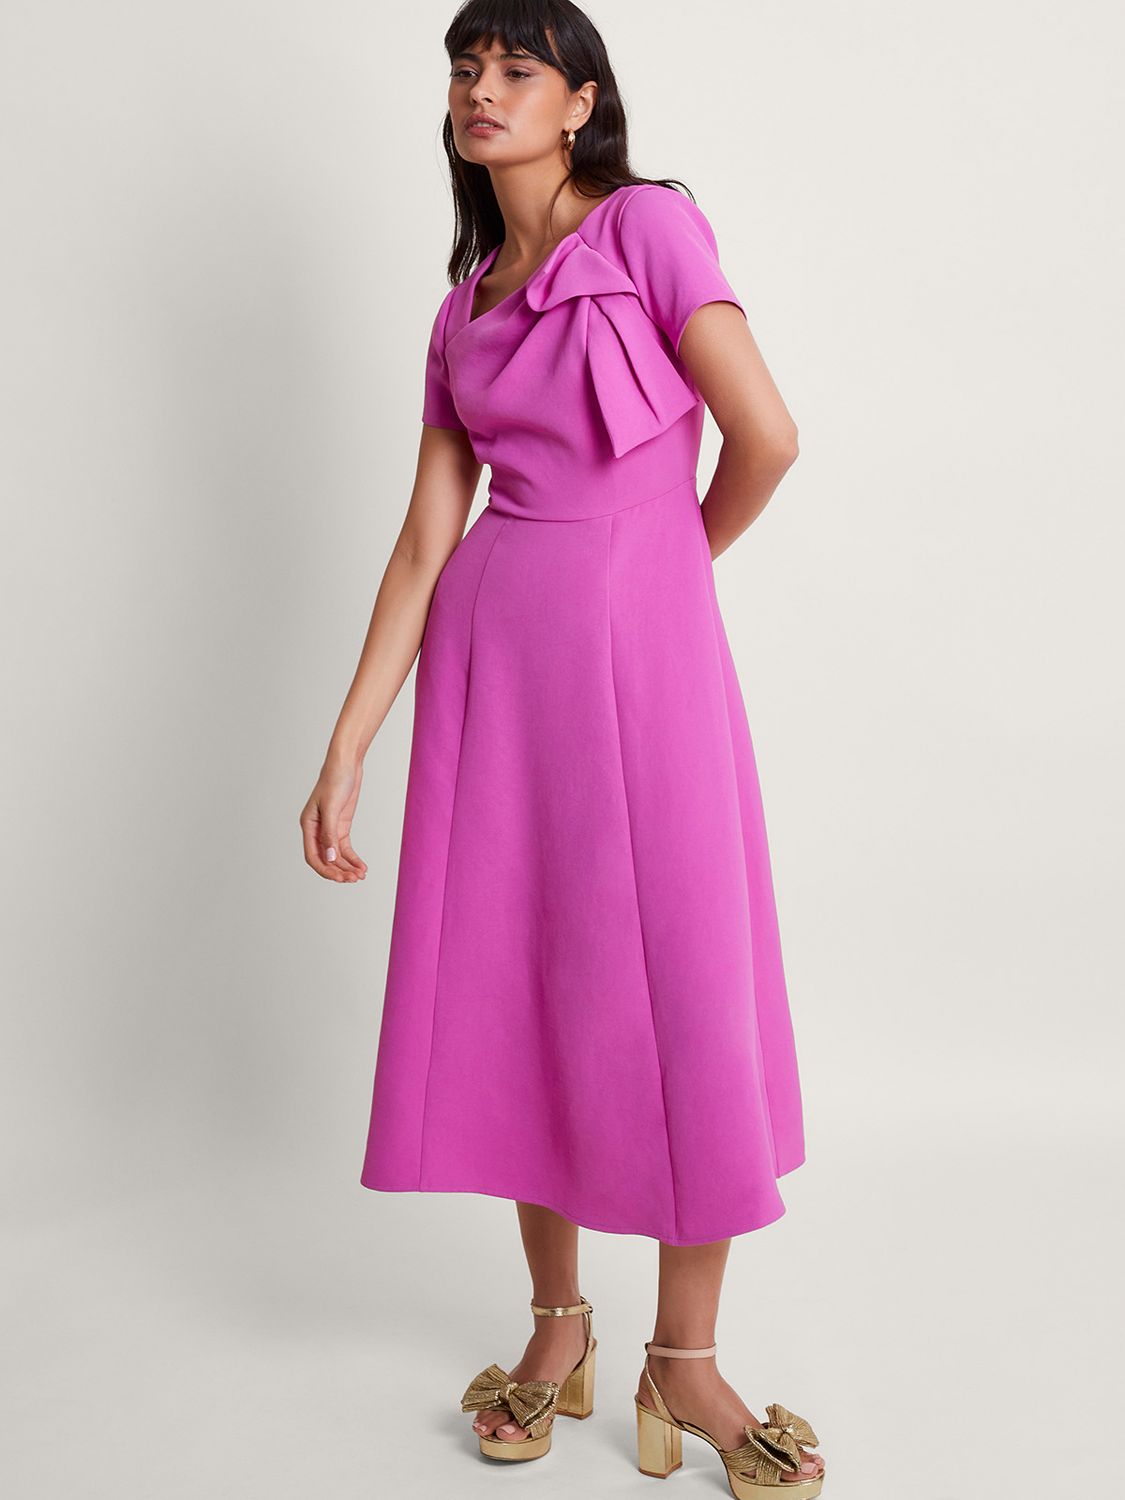 Monsoon Poppy Midi Dress, Pink, 8